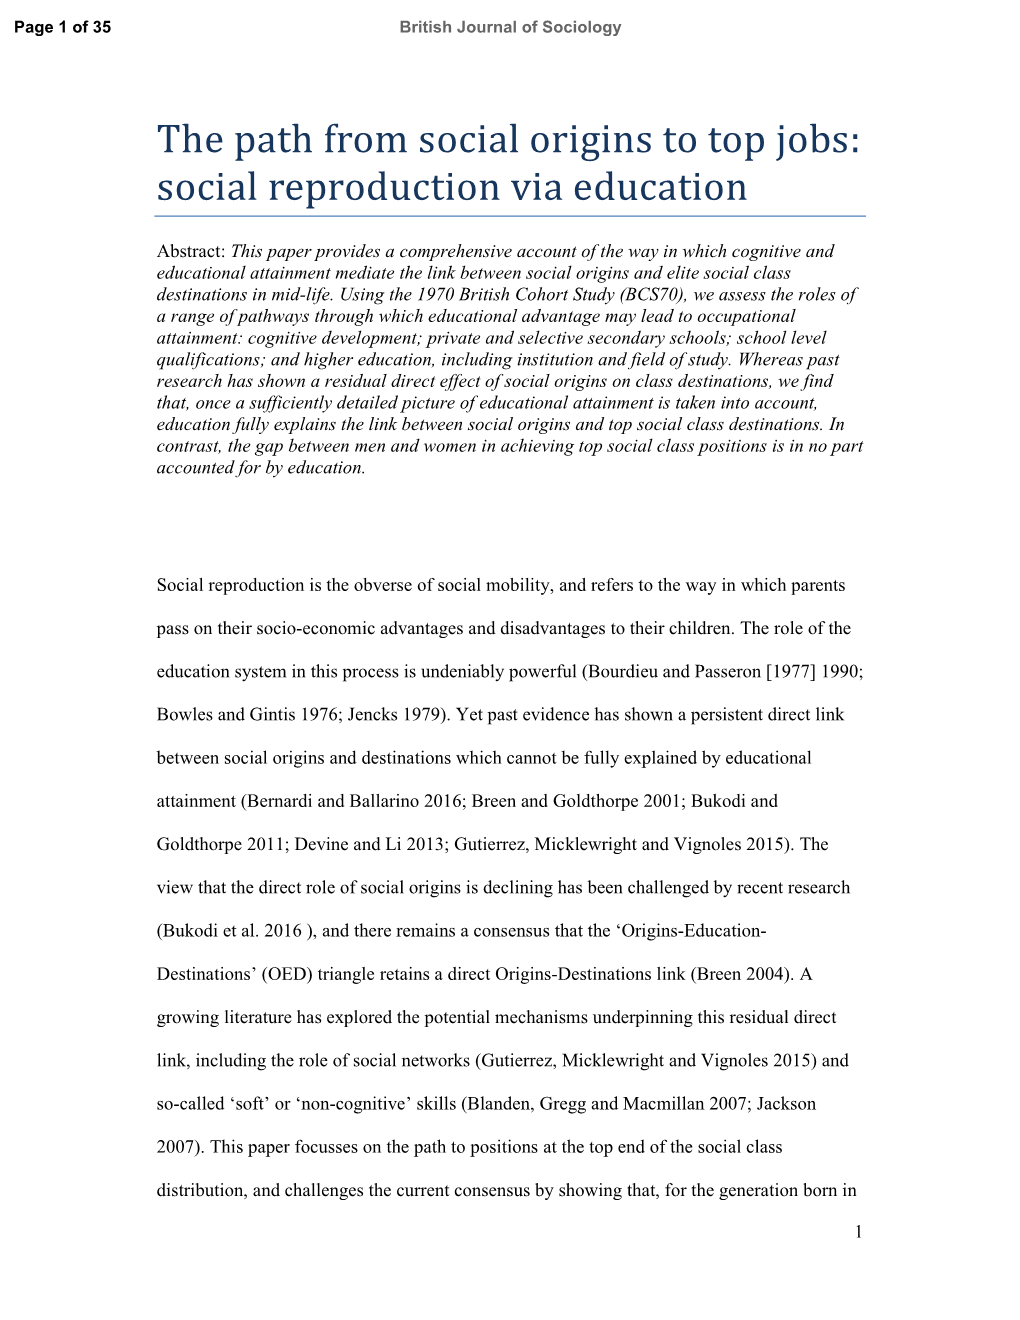 Social Reproduction Via Education